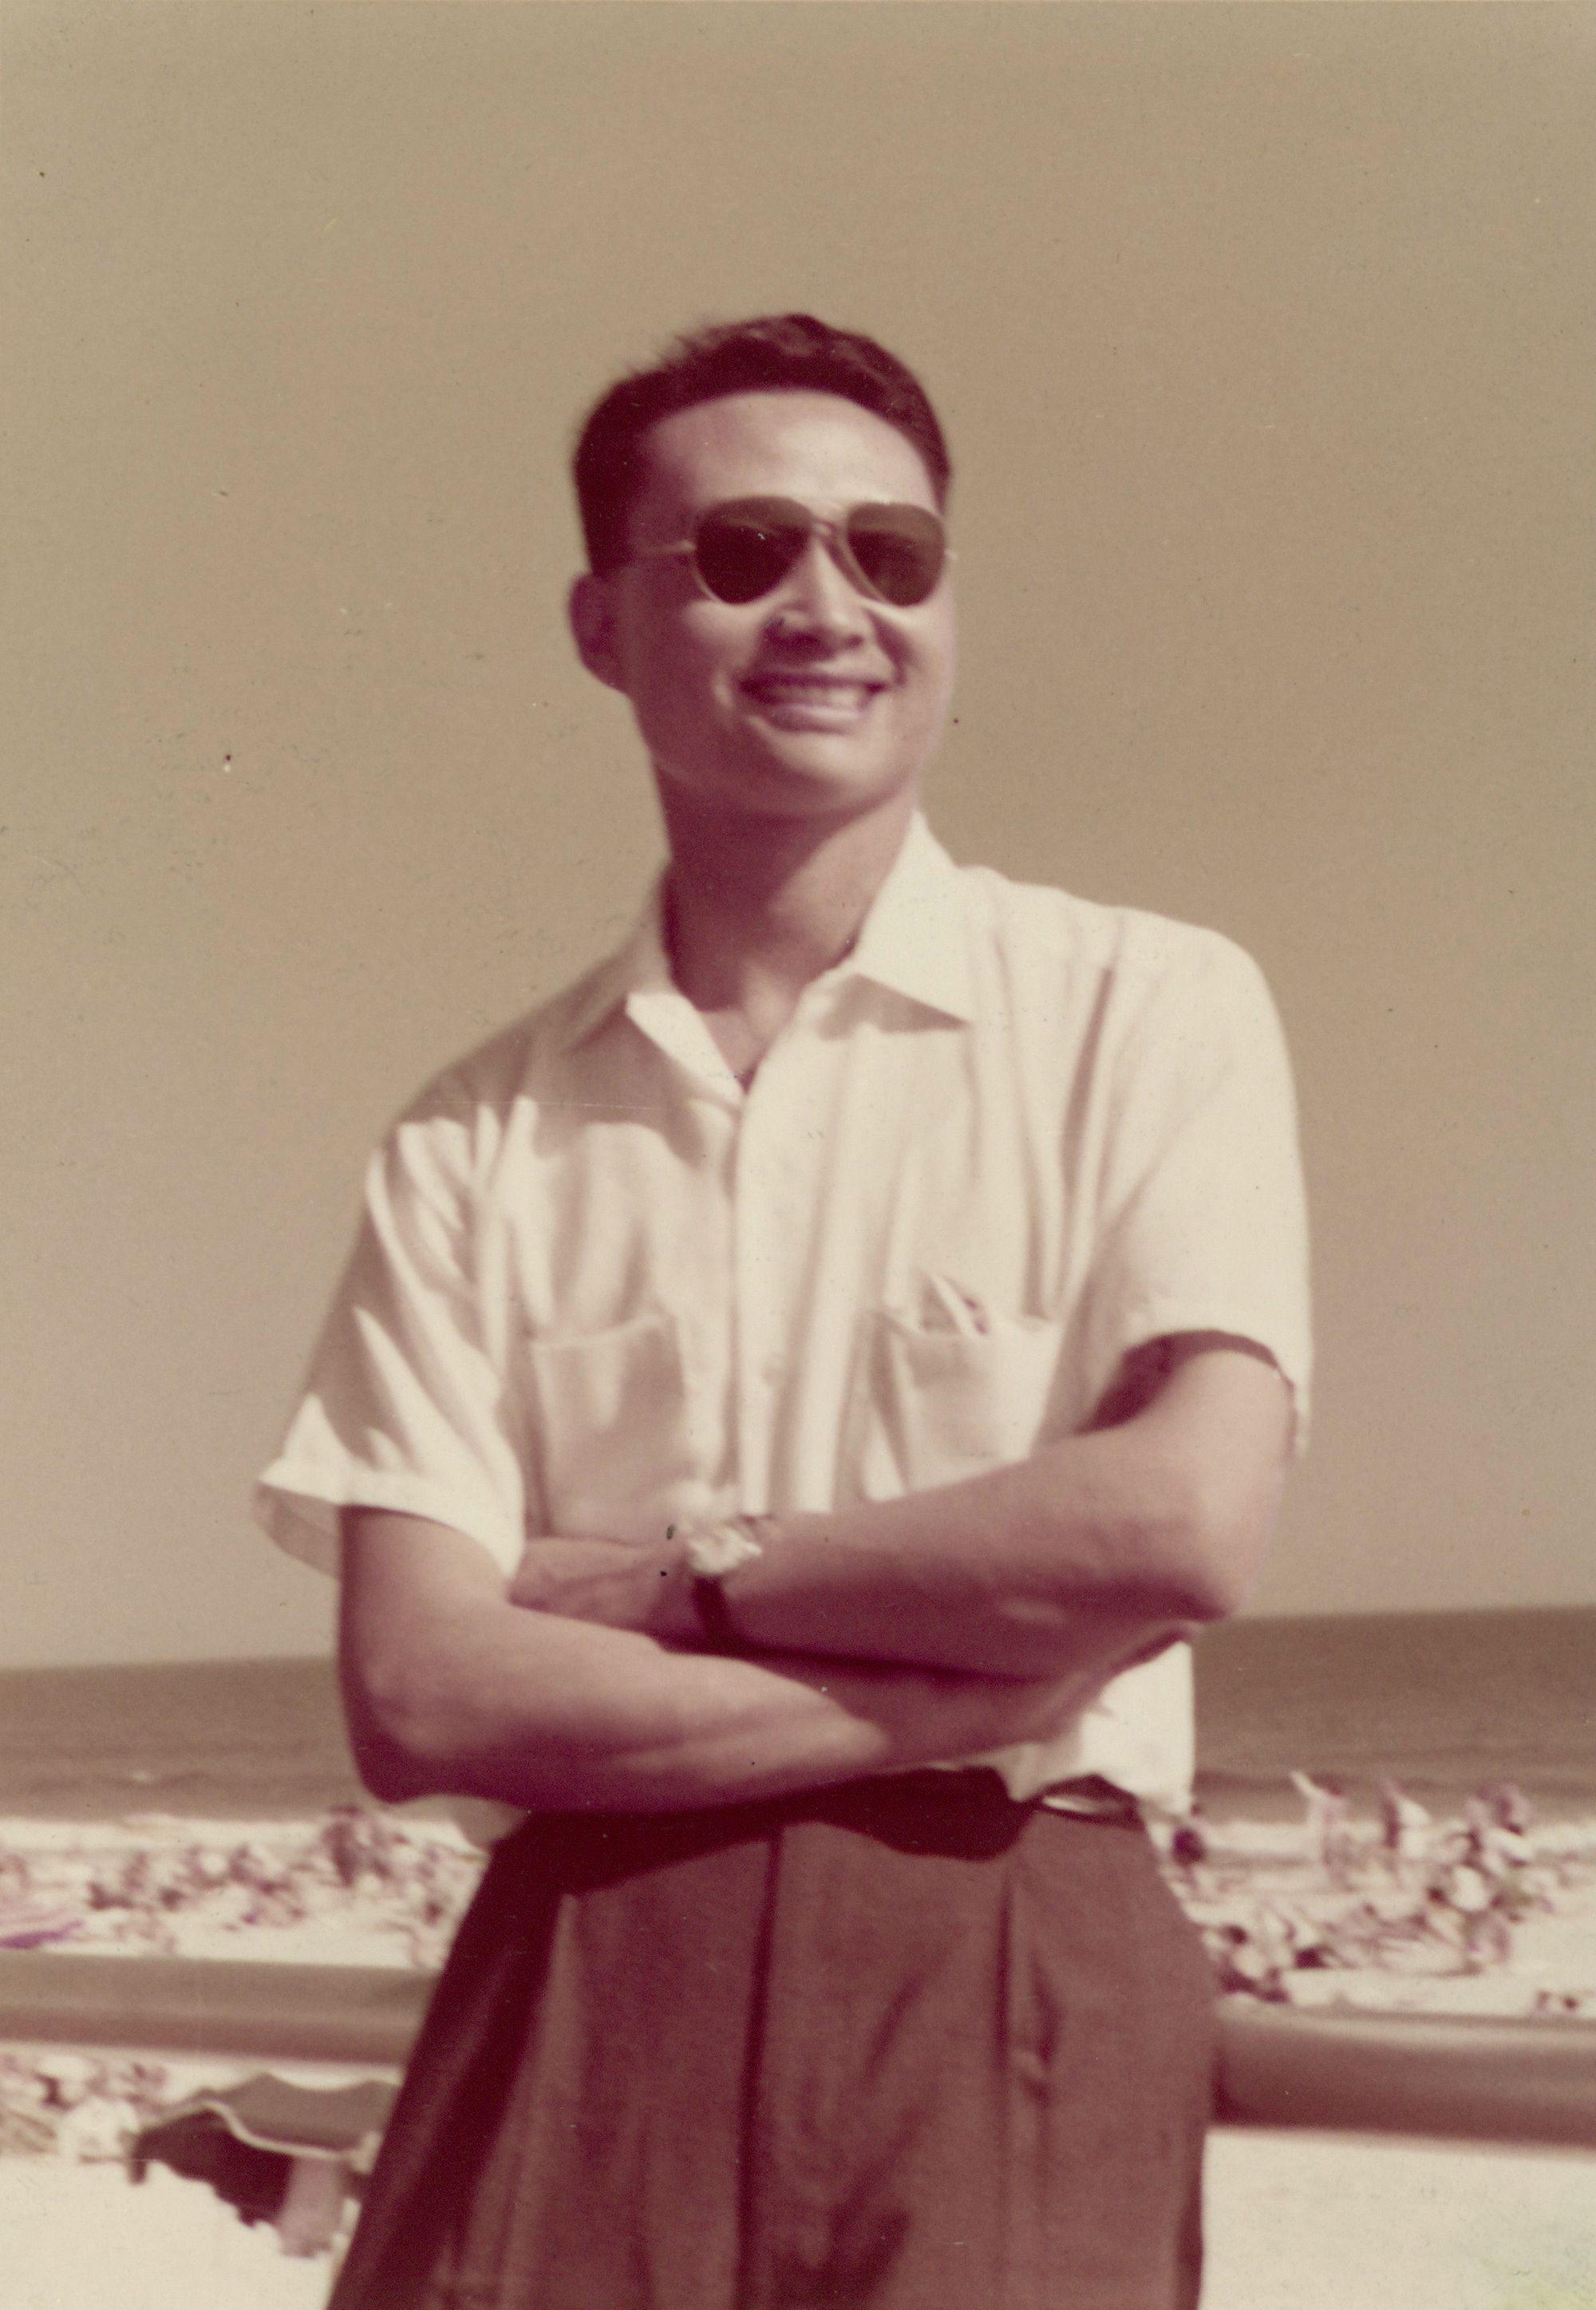 Portrait of a man on a beach